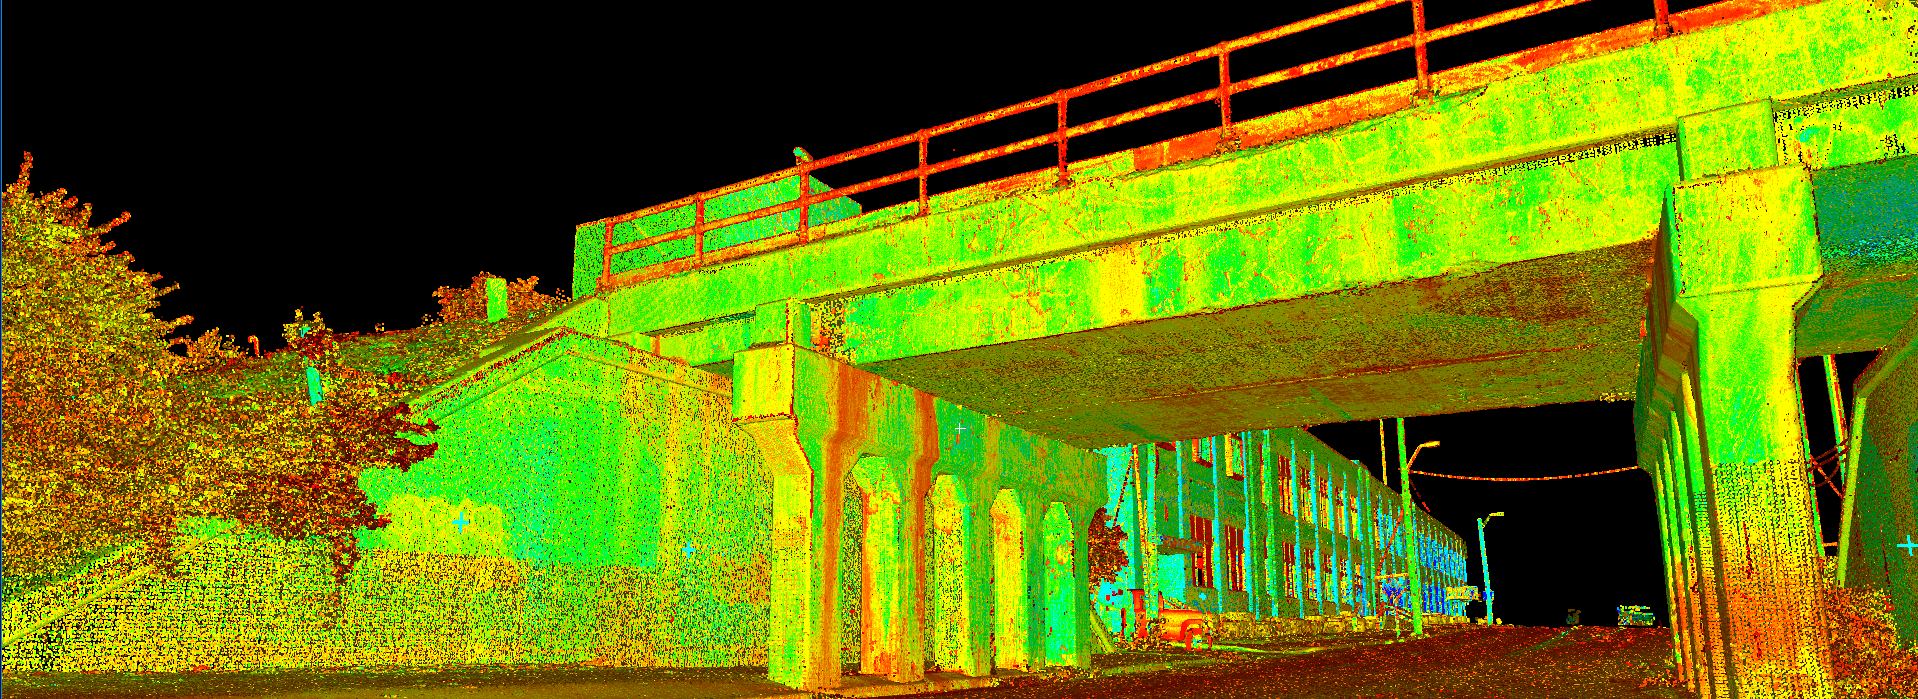 Laser scan point cloud of railroad bridge